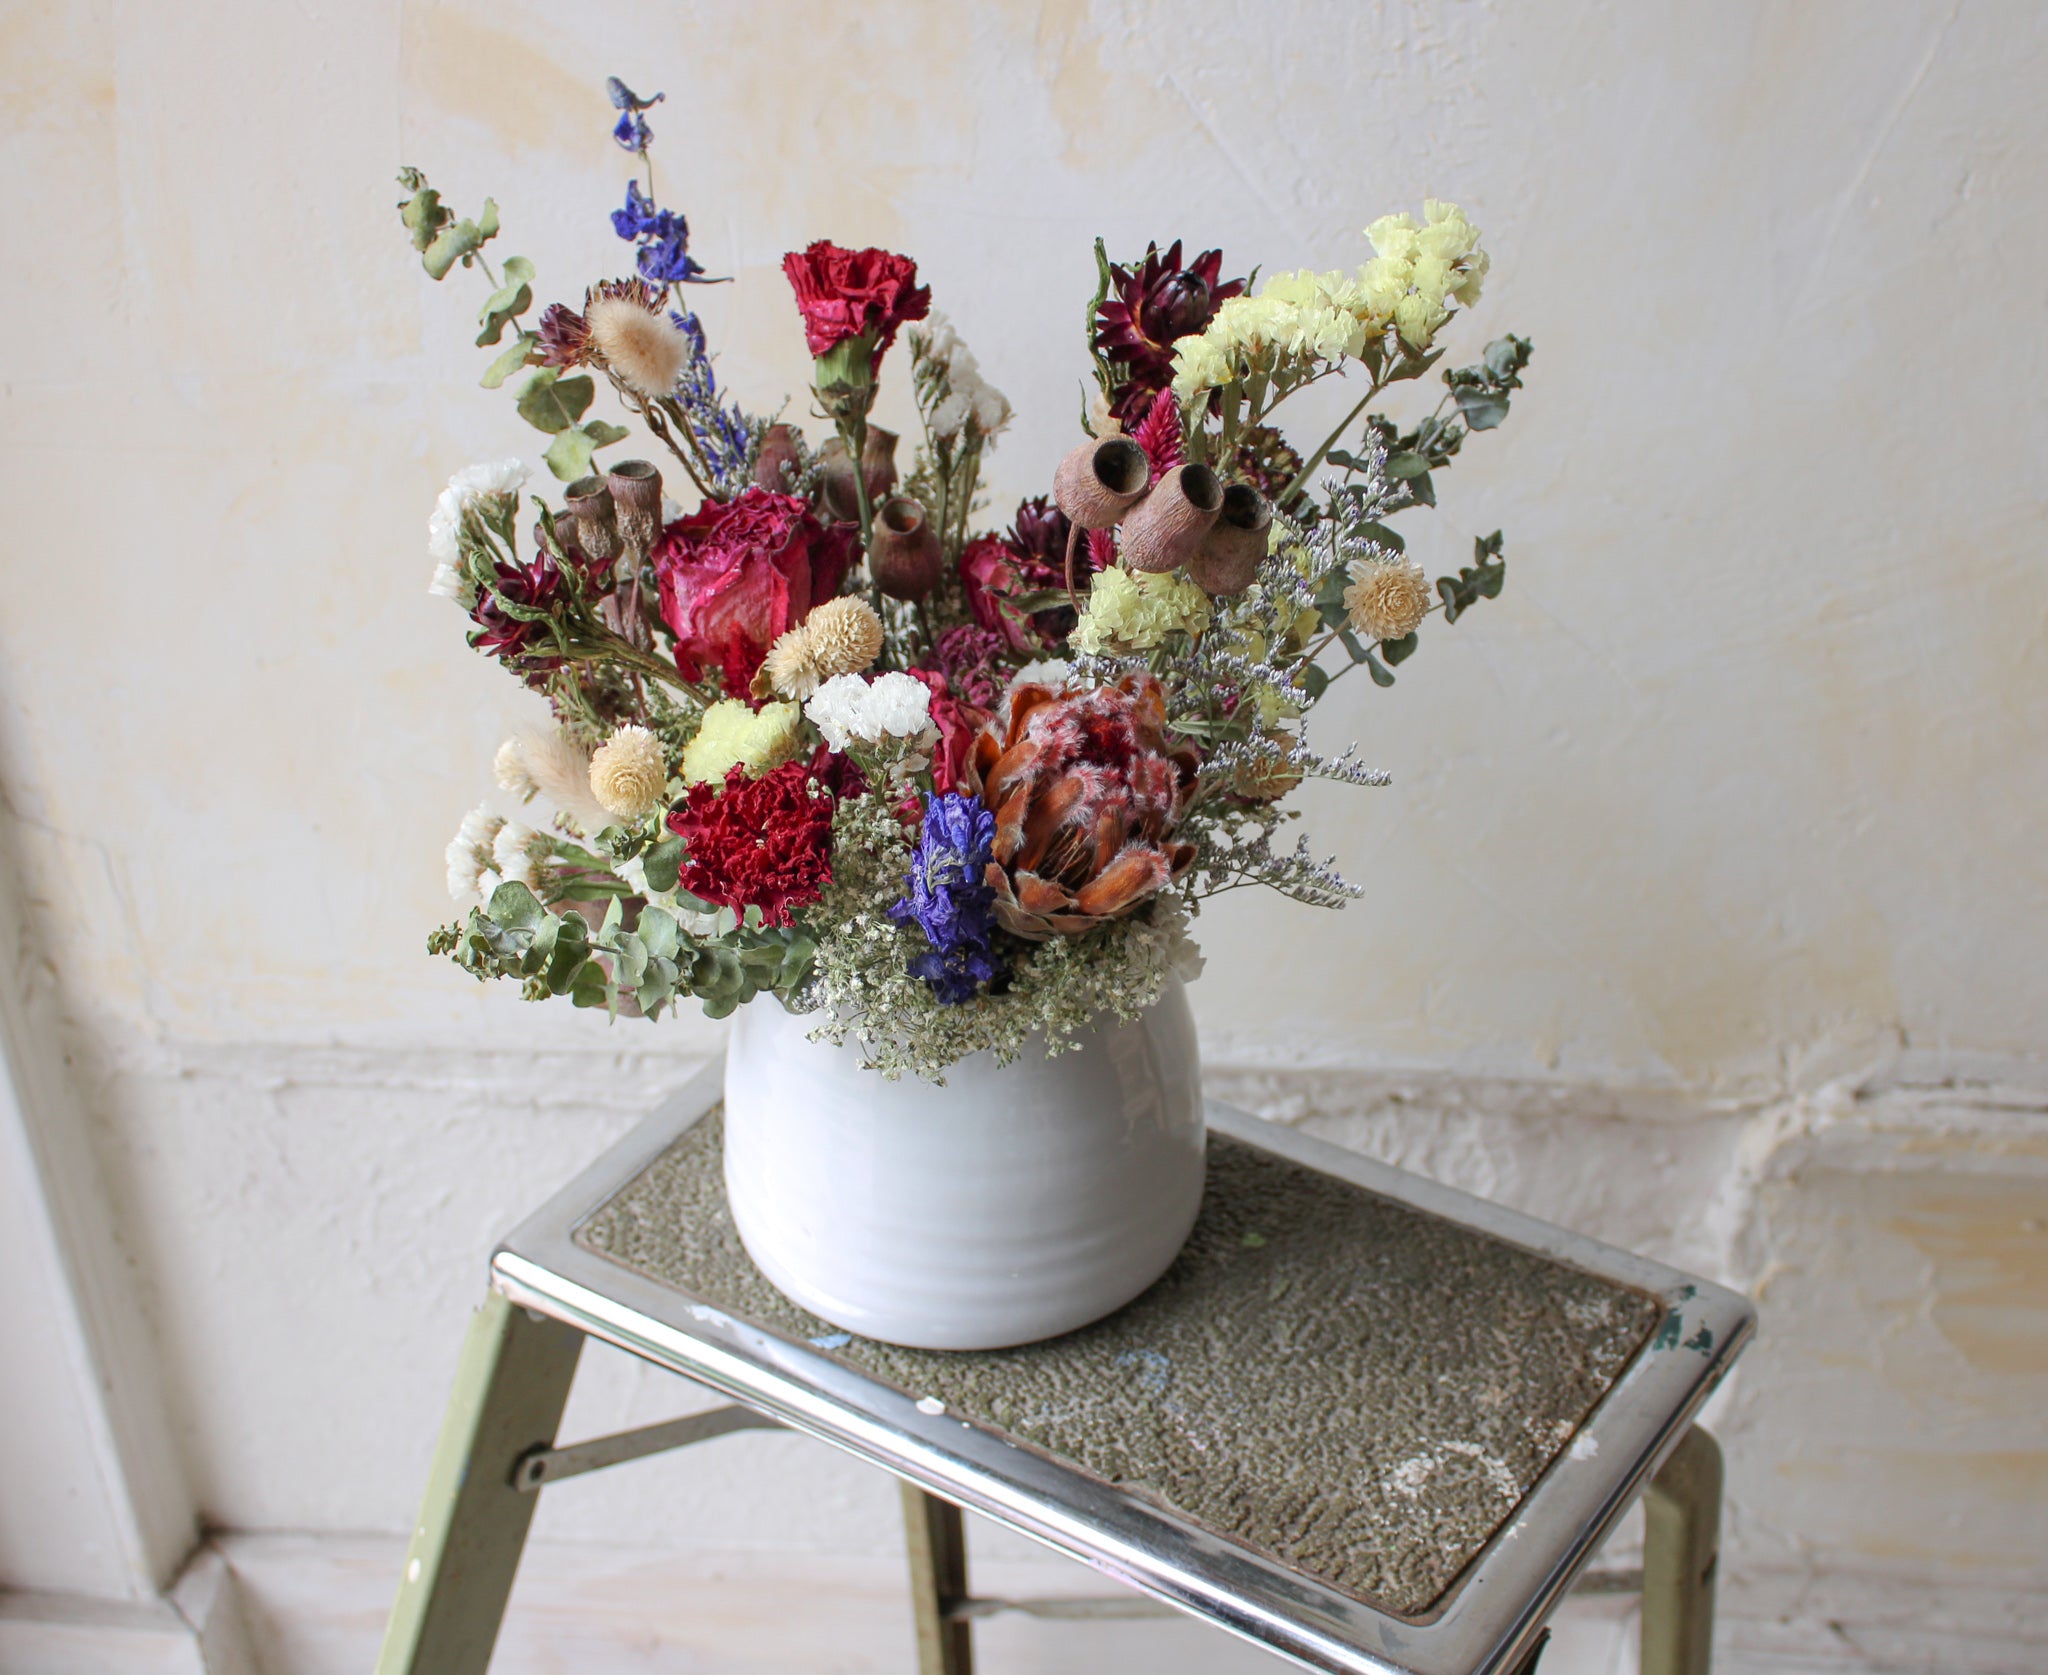 dry flower arrangements for tables